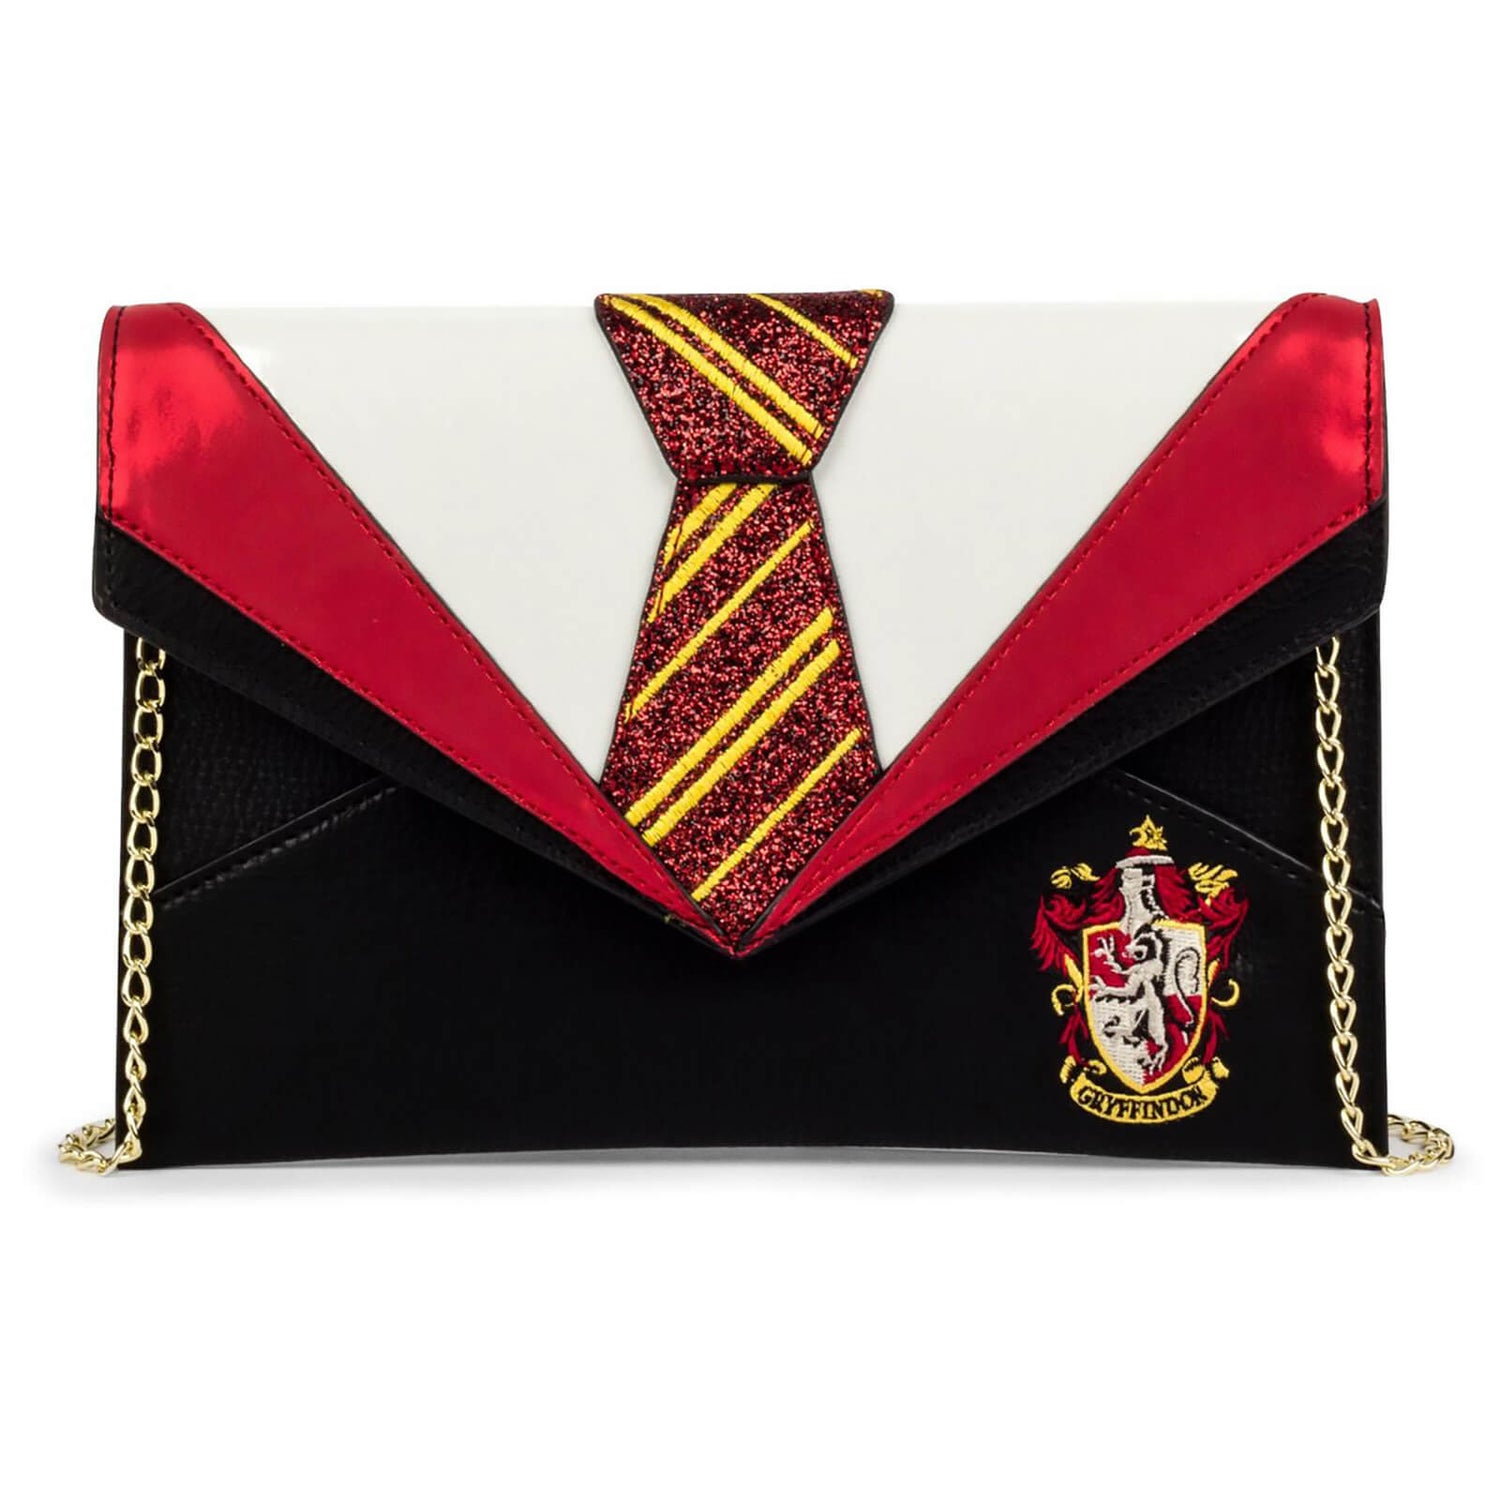 Danielle Nicole Harry Potter Gryffindor Clutch Bag